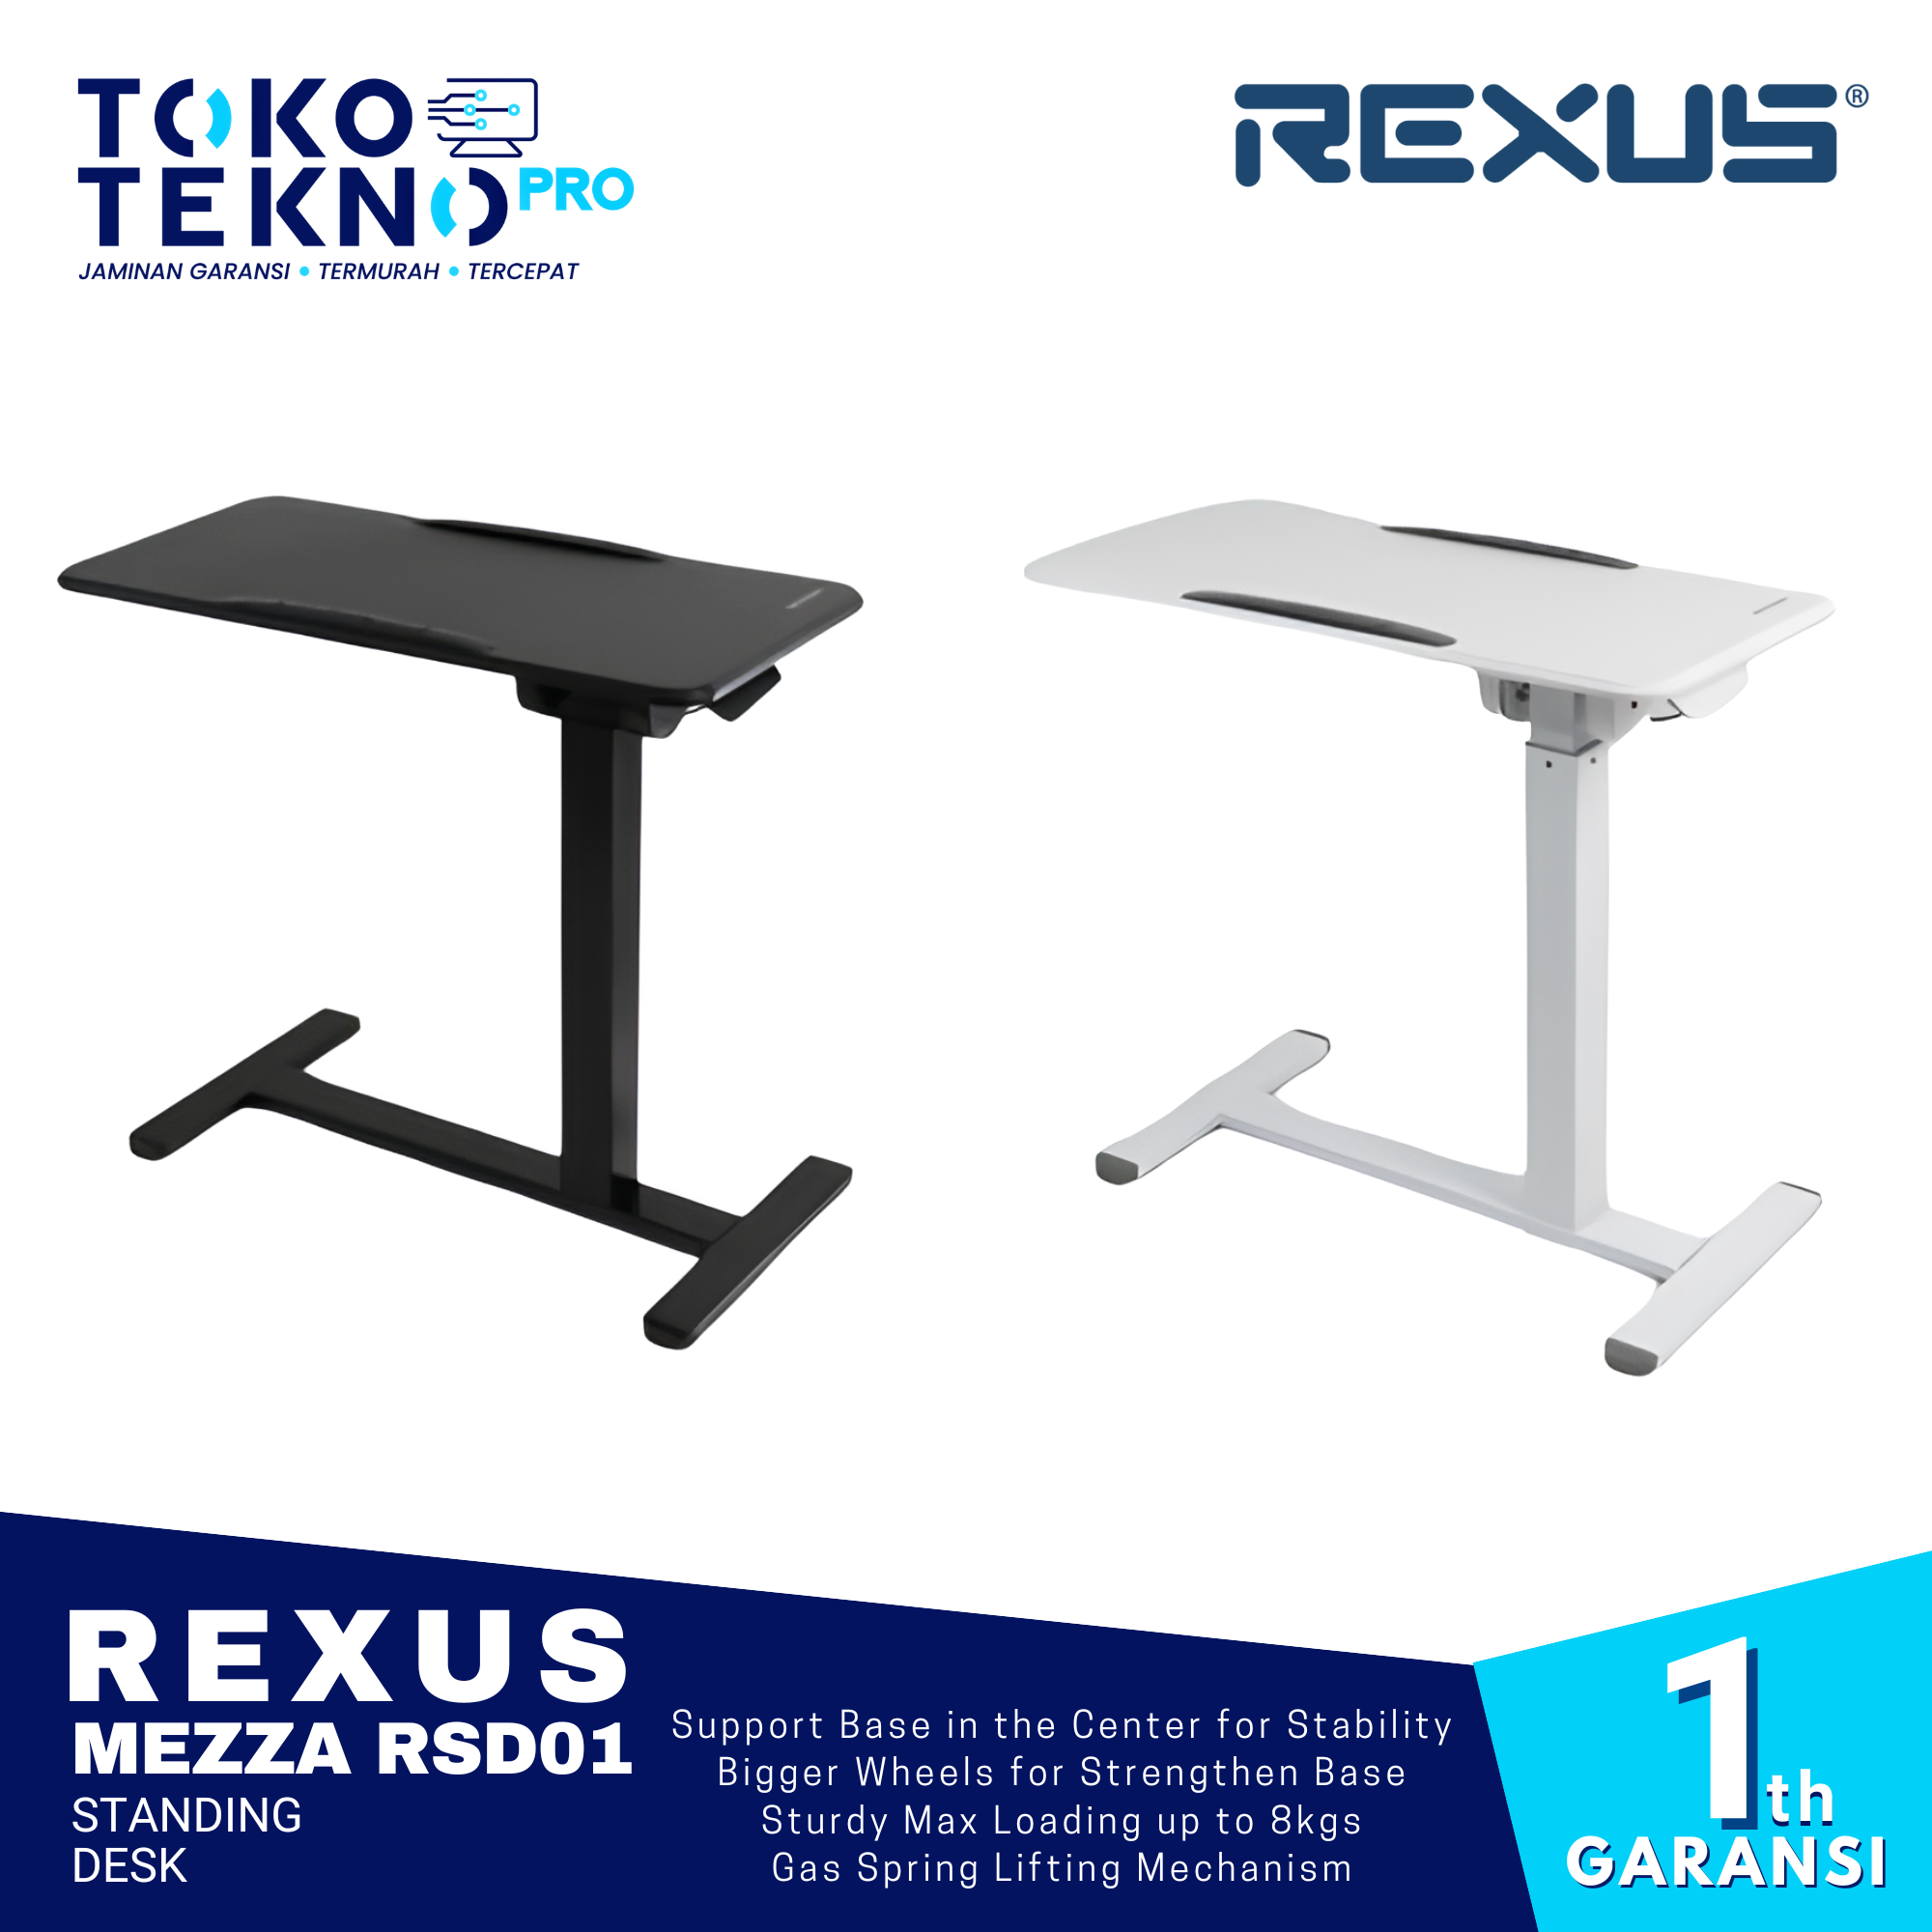 Rexus Mezza RSD 01